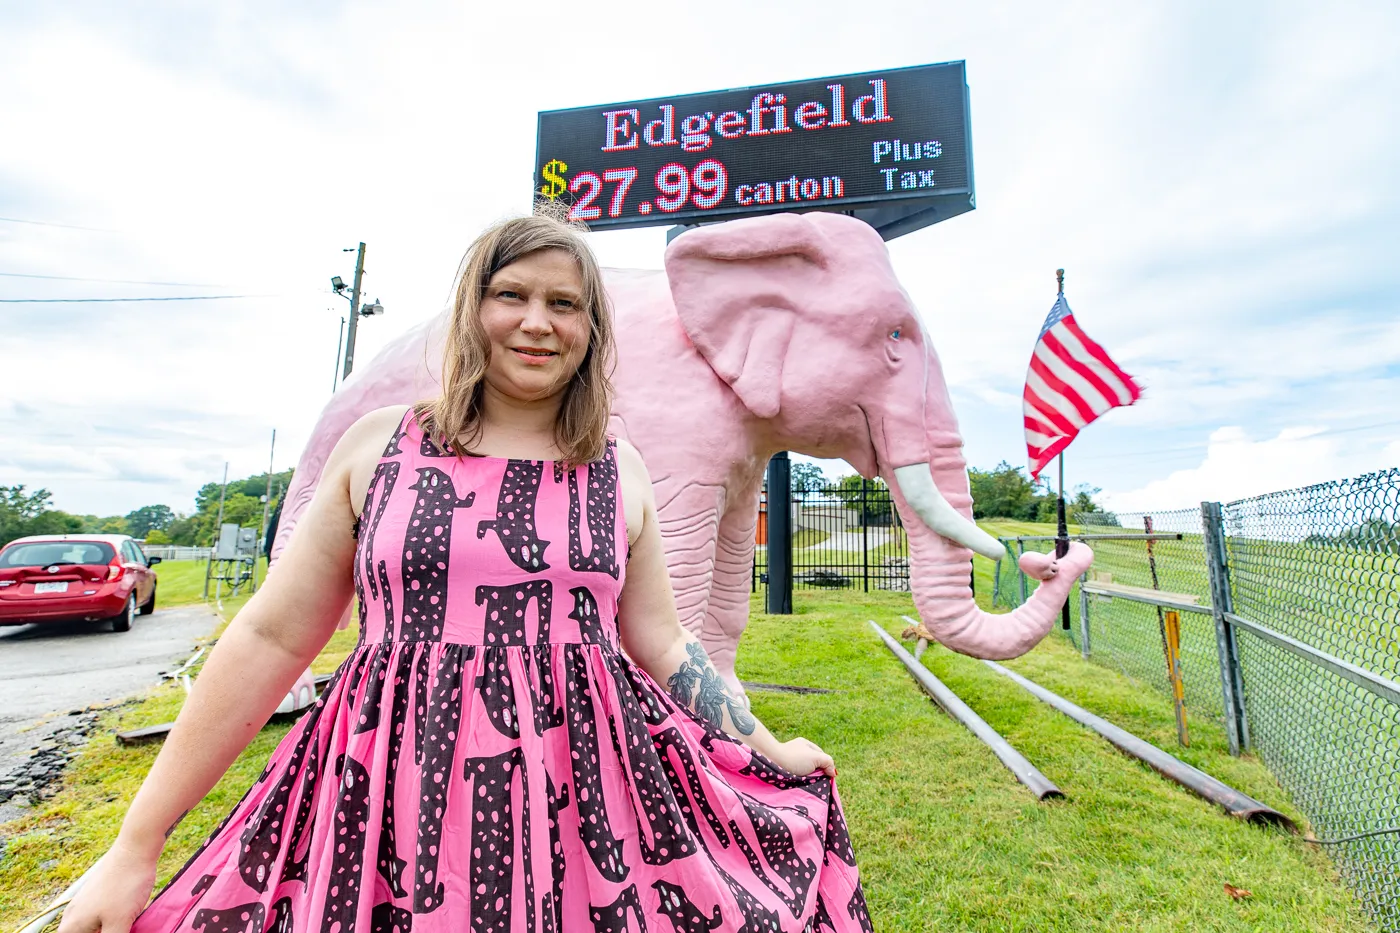 Big pink elephant gas station roadside attraction in Fenton, Missouri